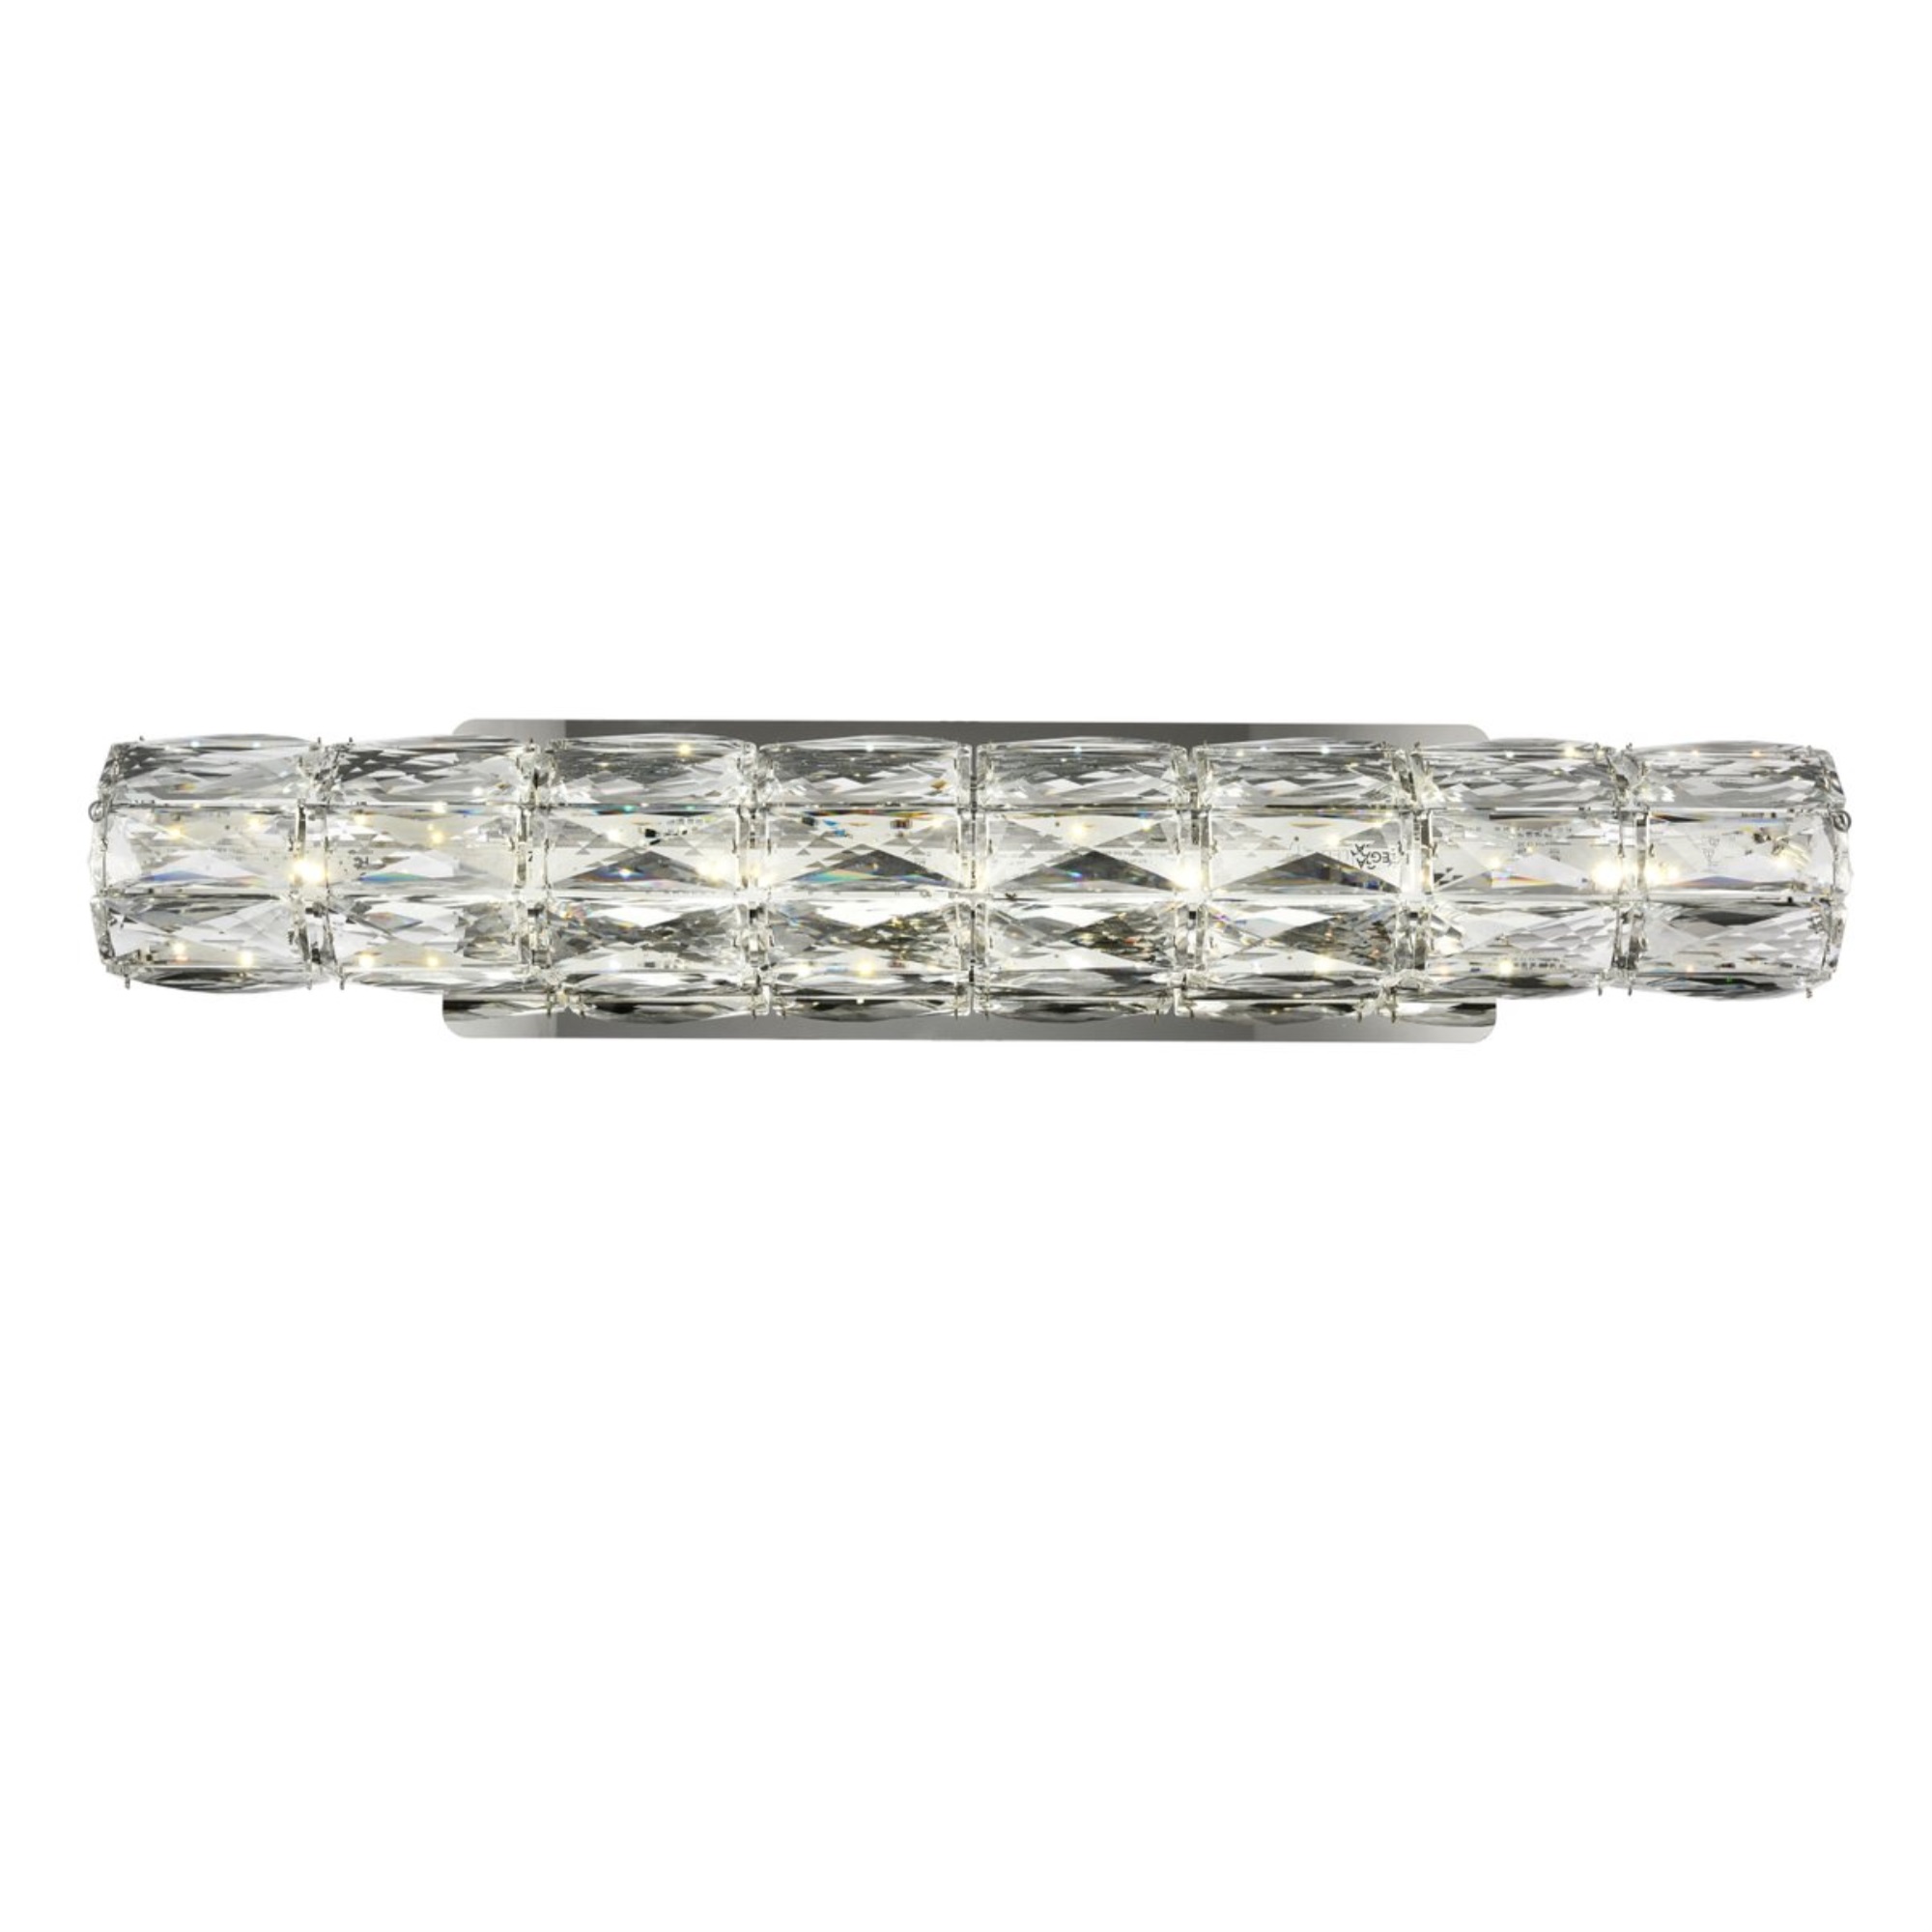 Elegant Lighting Valetta Integrated LED chip light Chrome Wall Sconce Clear Royal Cut Crystal